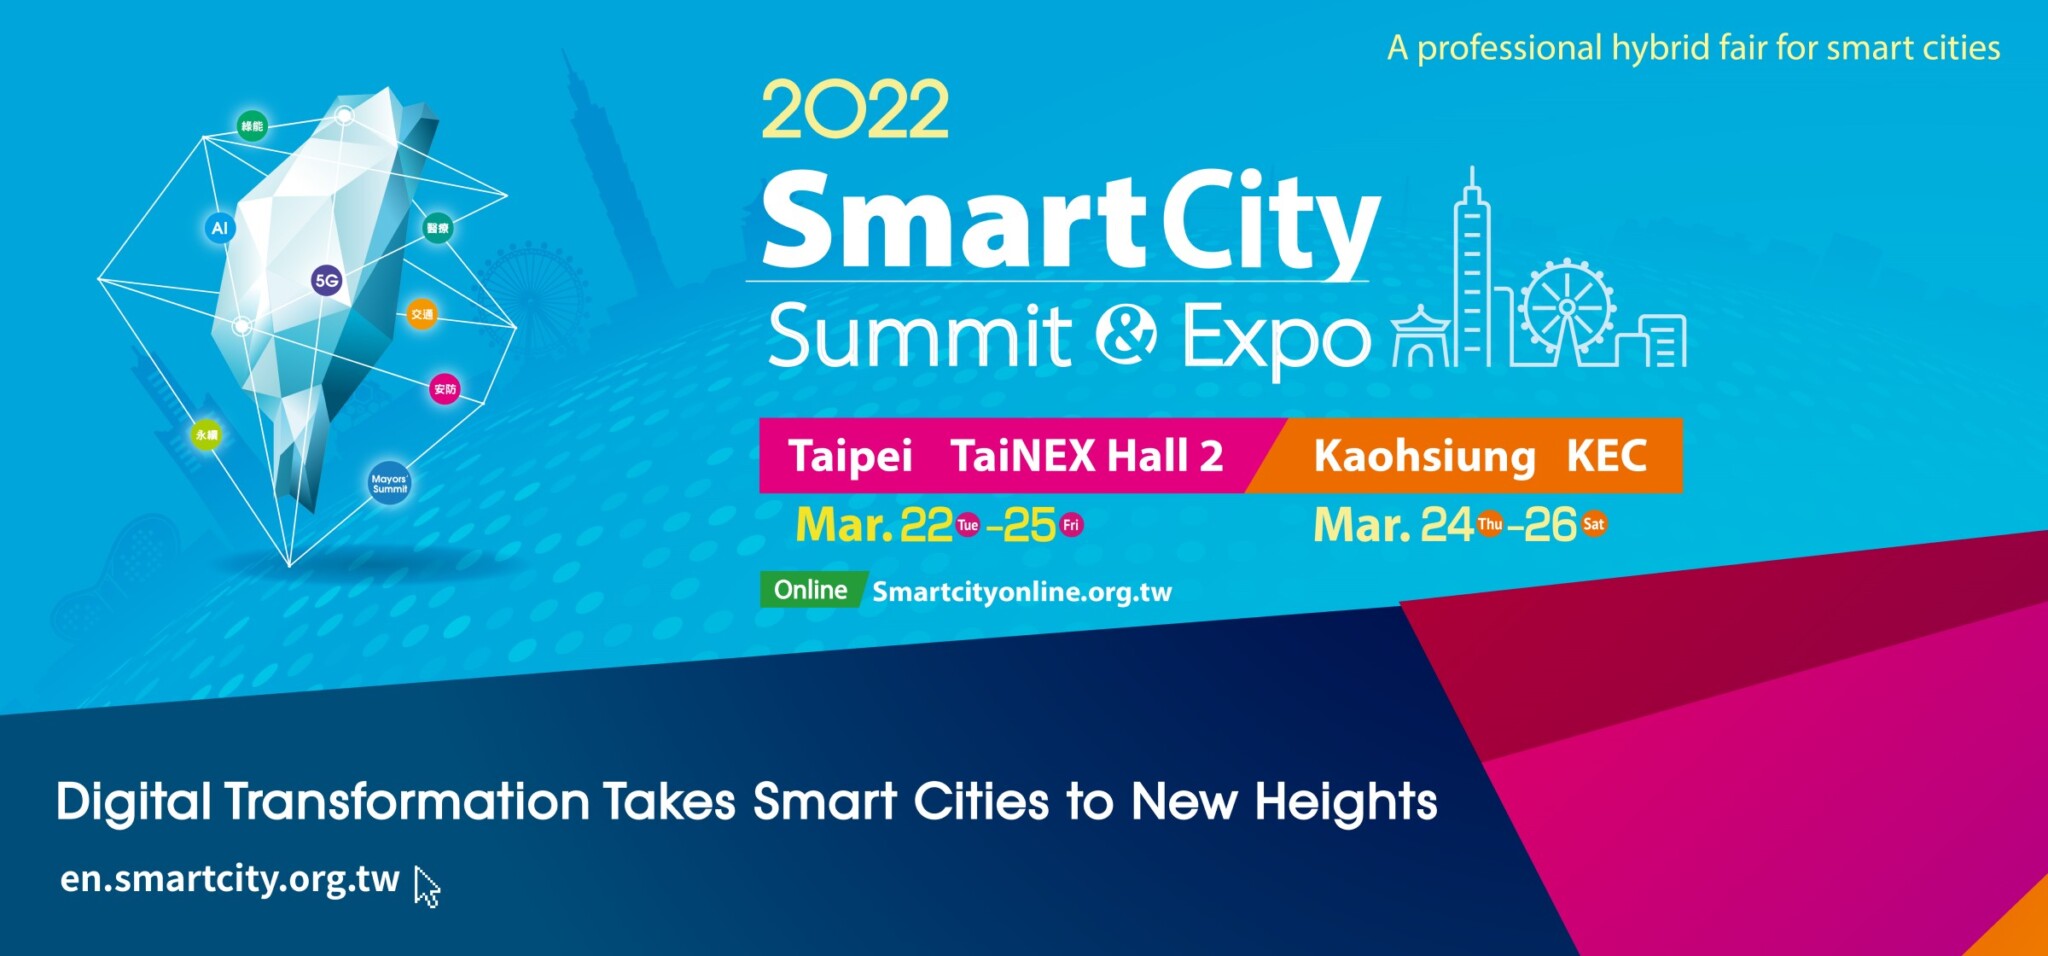 Konferencja Taipei Smart City Summit & Expo SCSE 2022 Wielkopolska